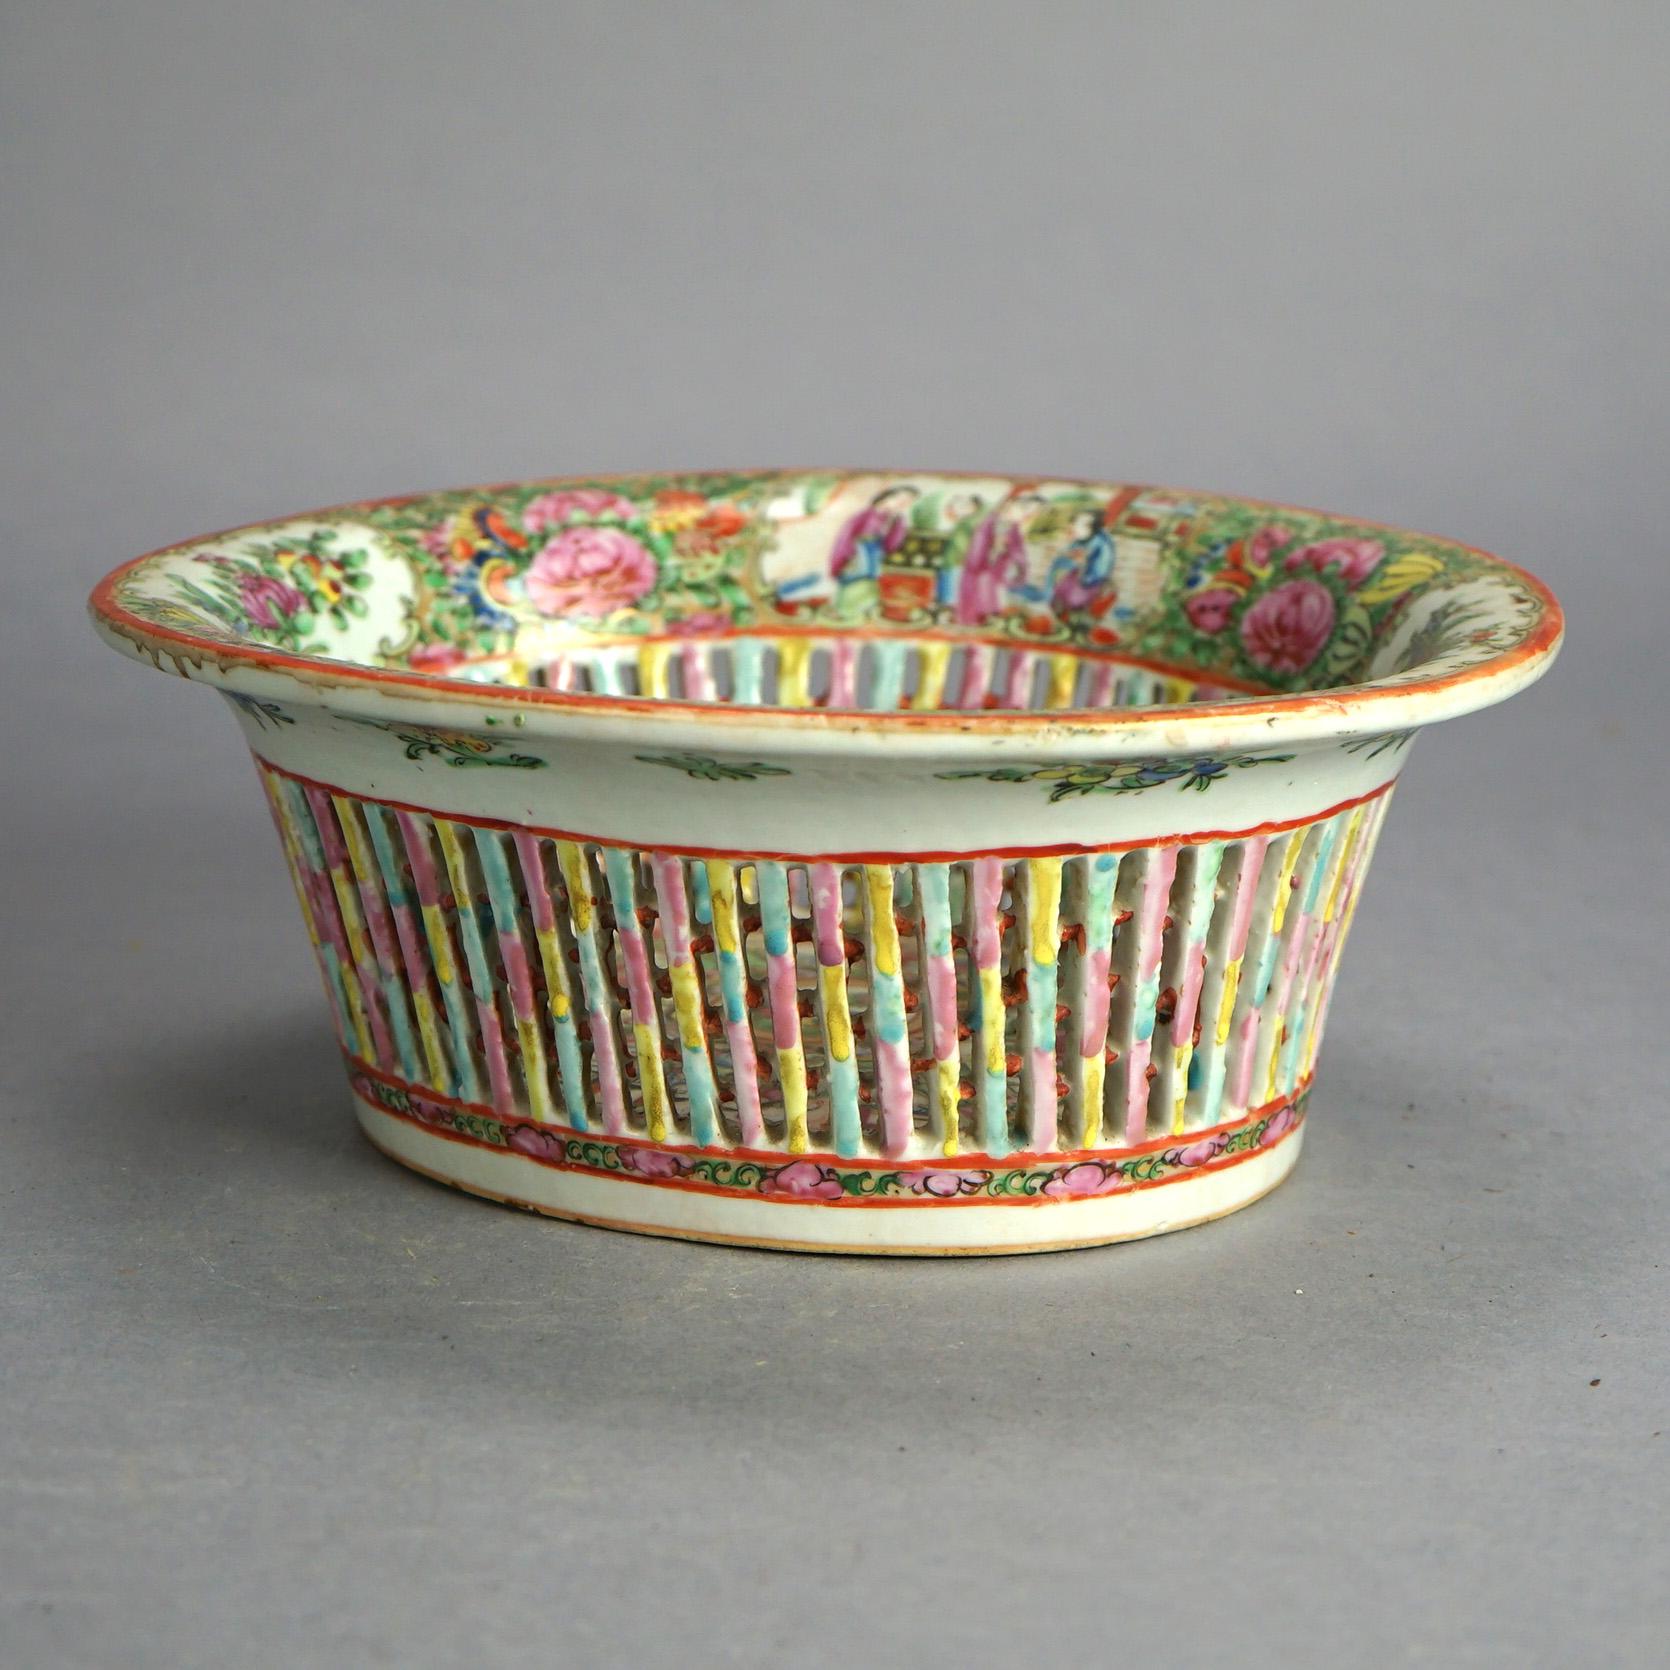 20th Century Antique Rose Medallion Reticulated Porcelain Basket, Garden & Genre Scenes C1900